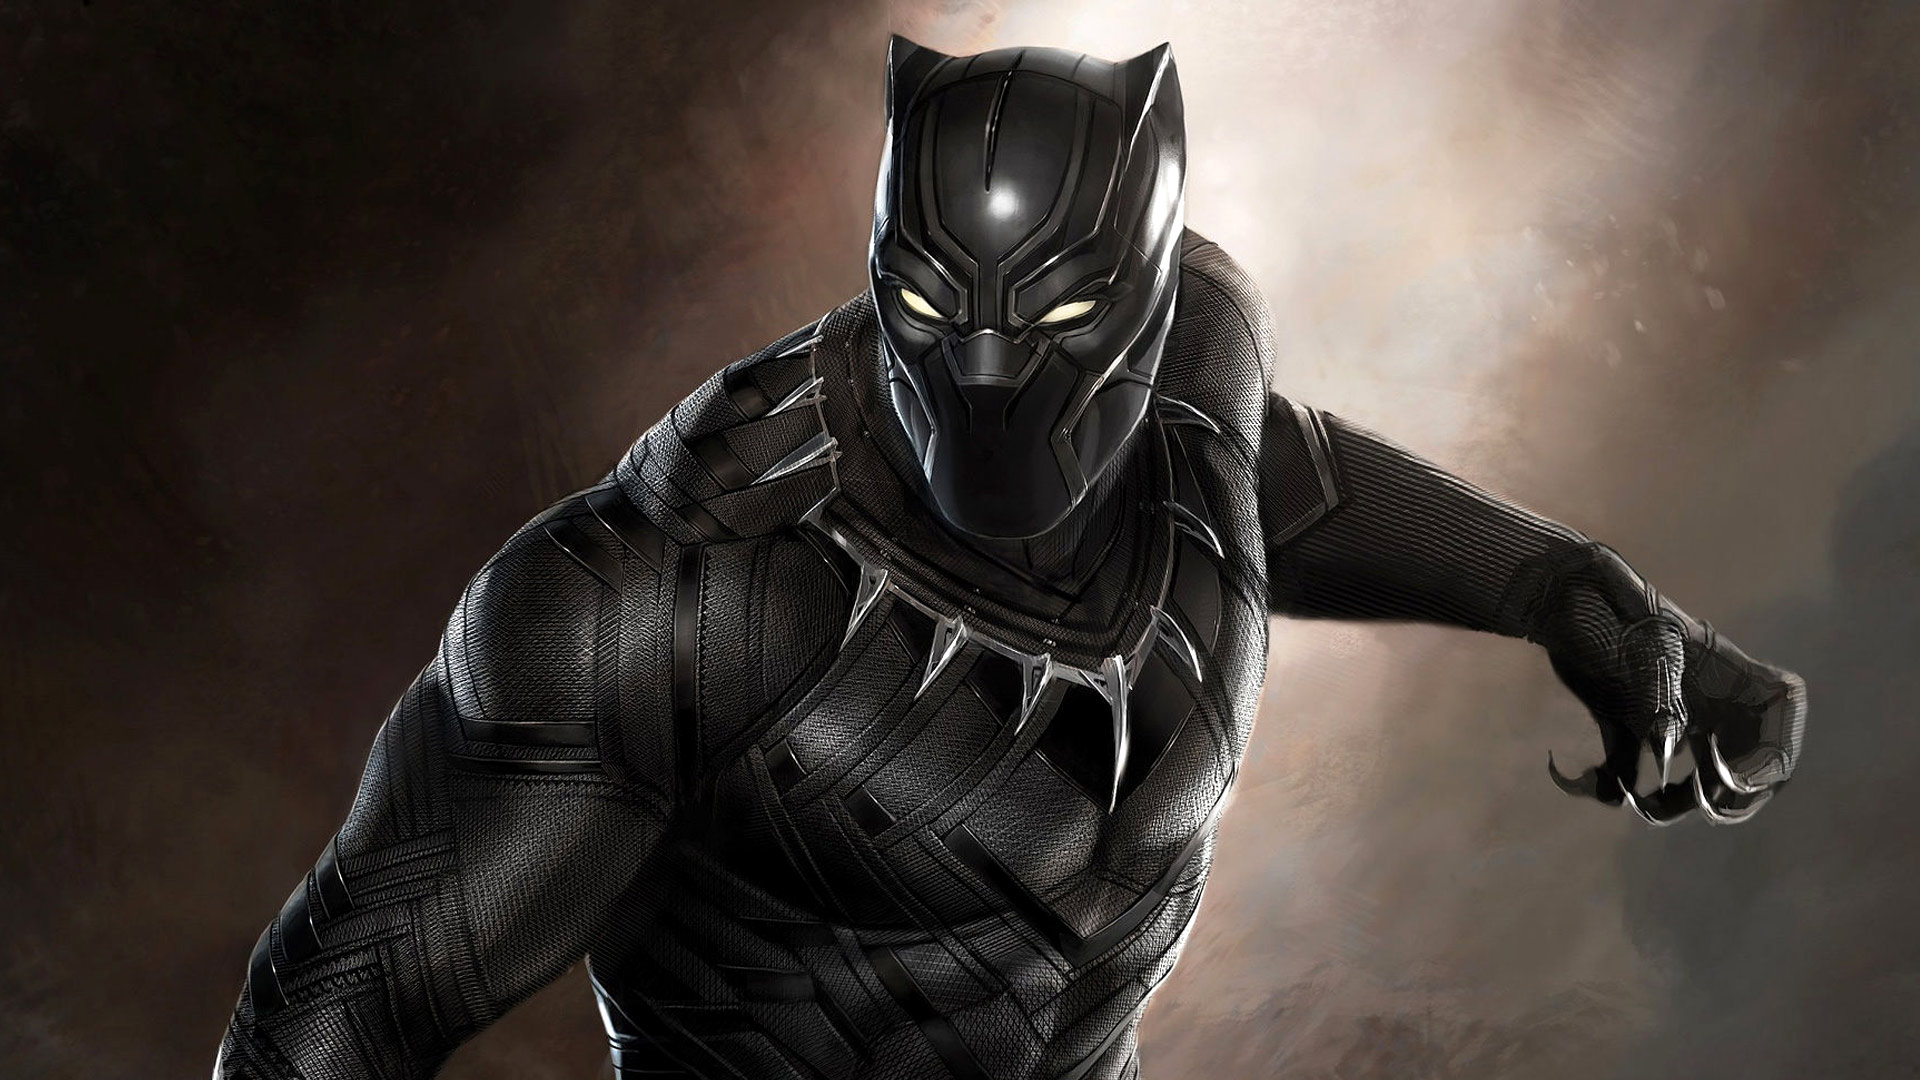 Black panther civil war costume